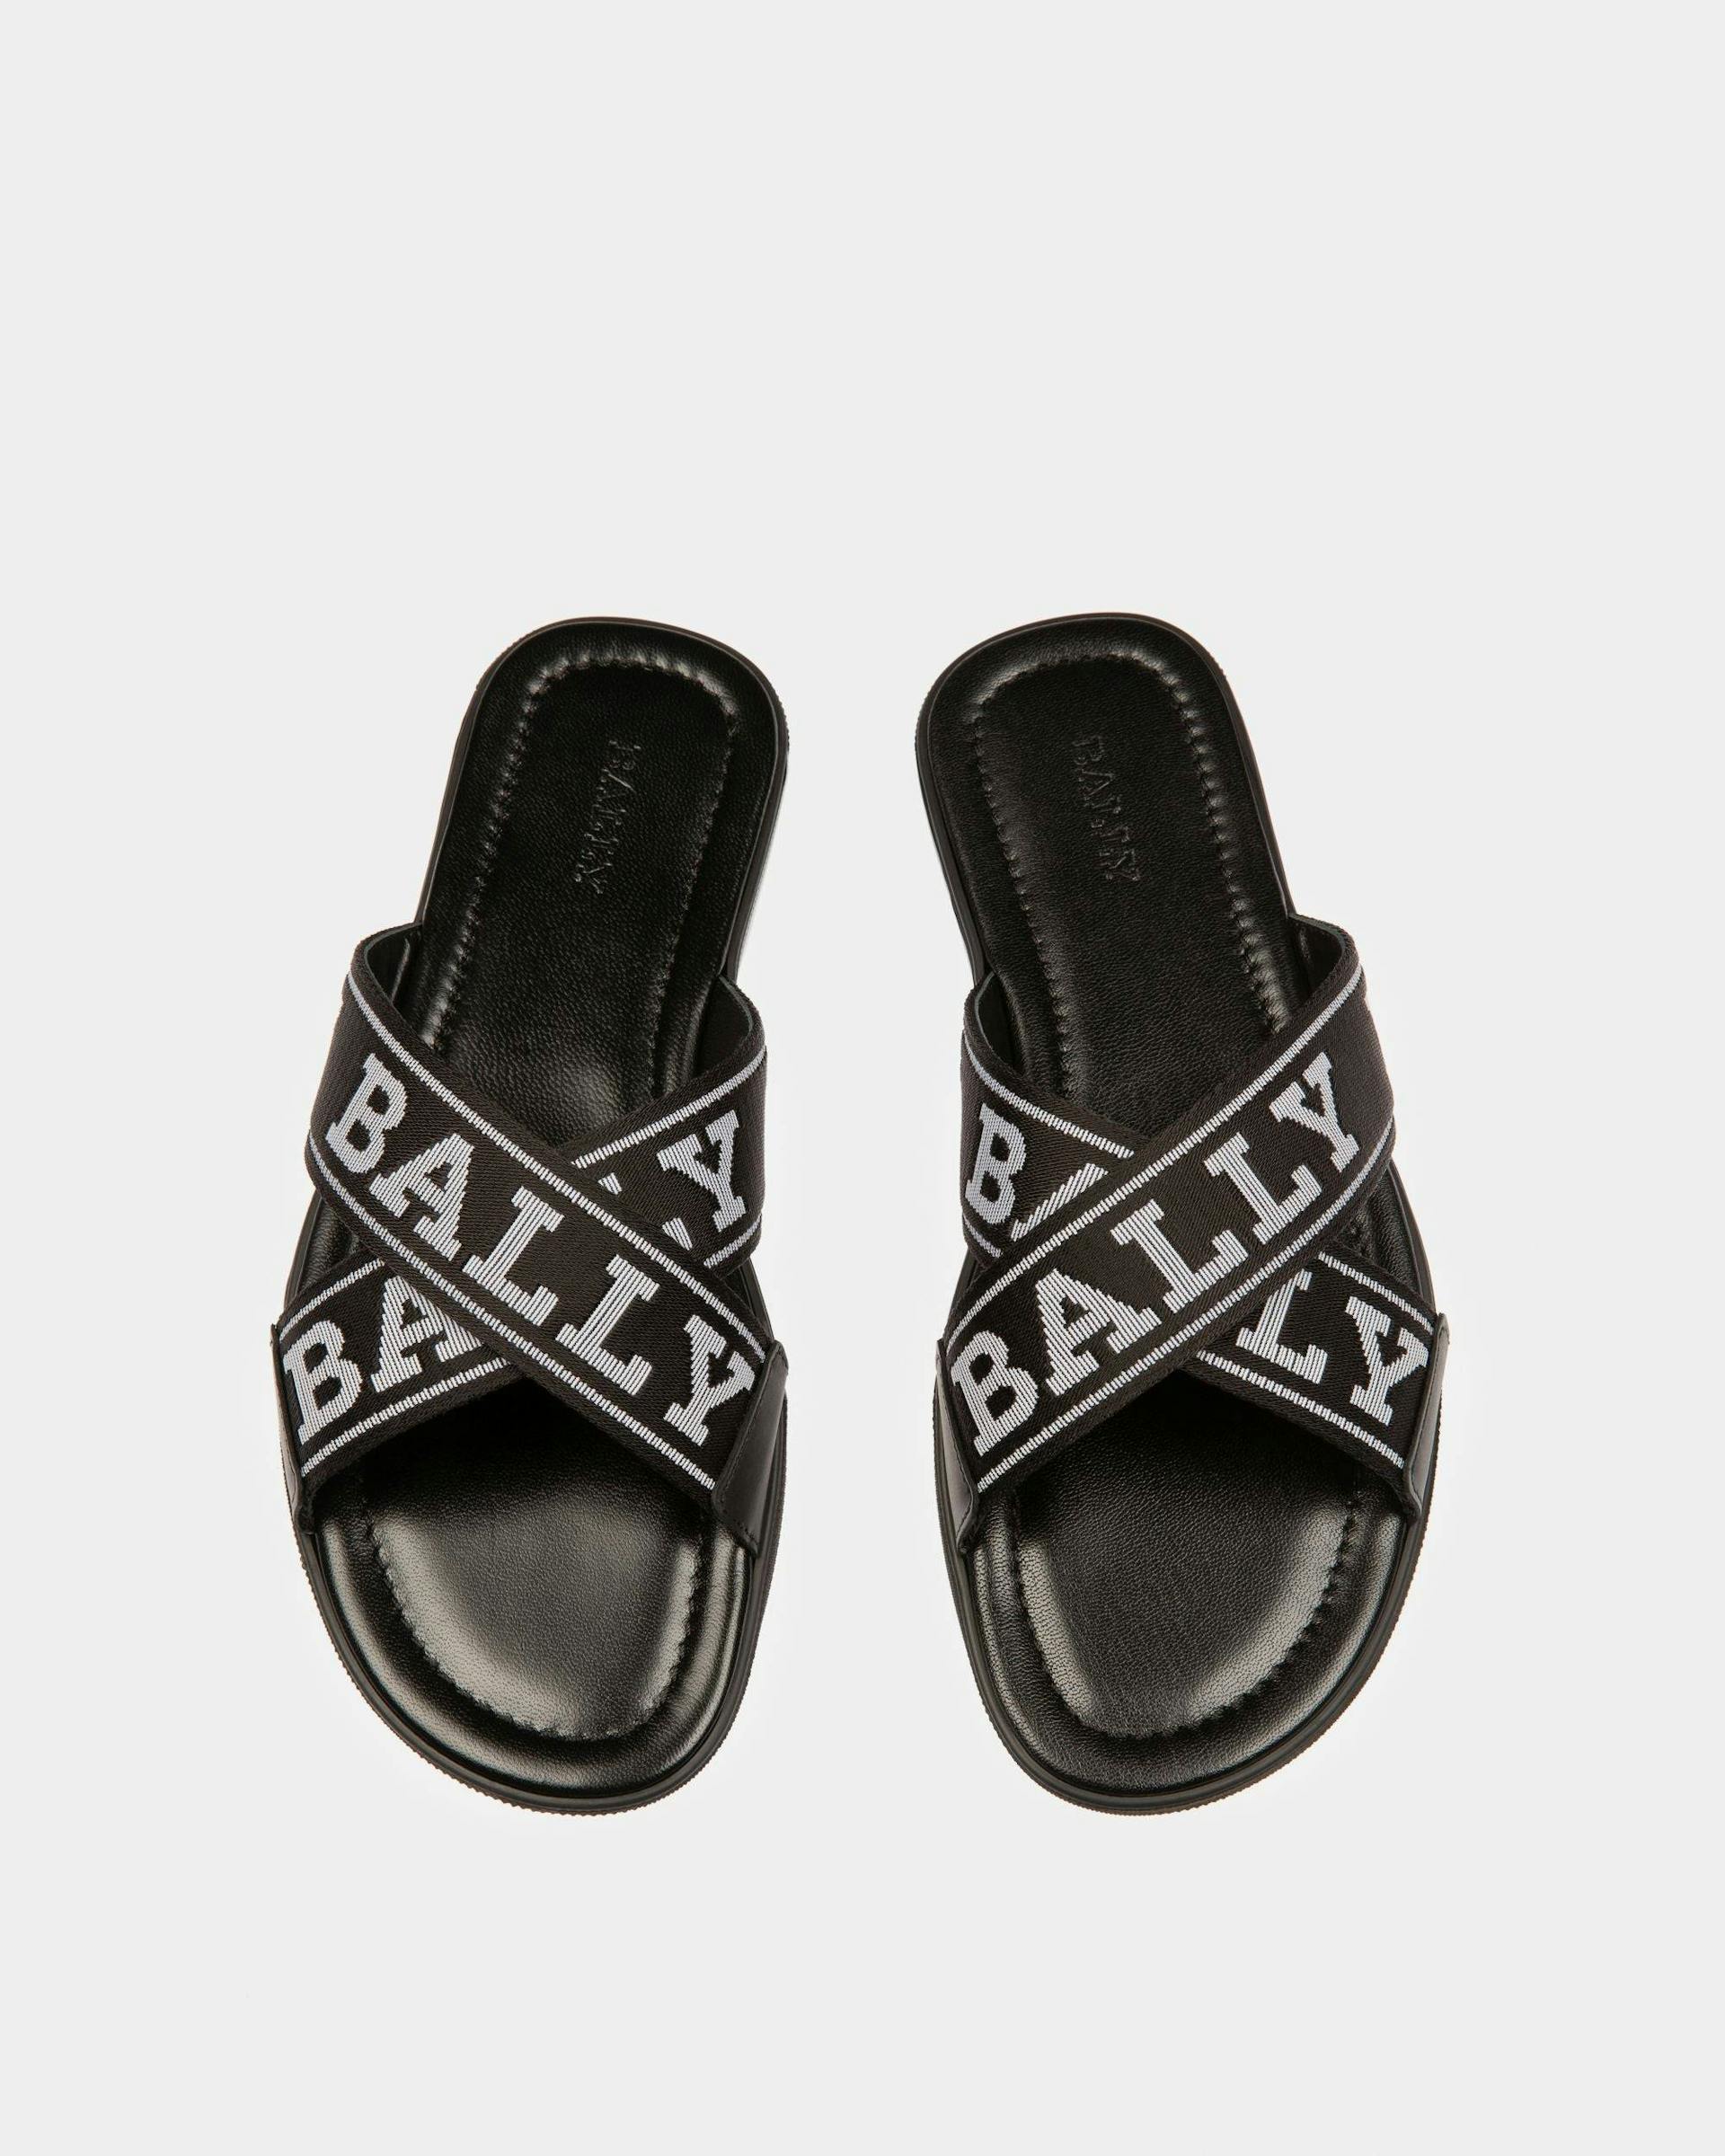 Bonks Fabric & Leather Sandals In Black - Men's - Bally - 02